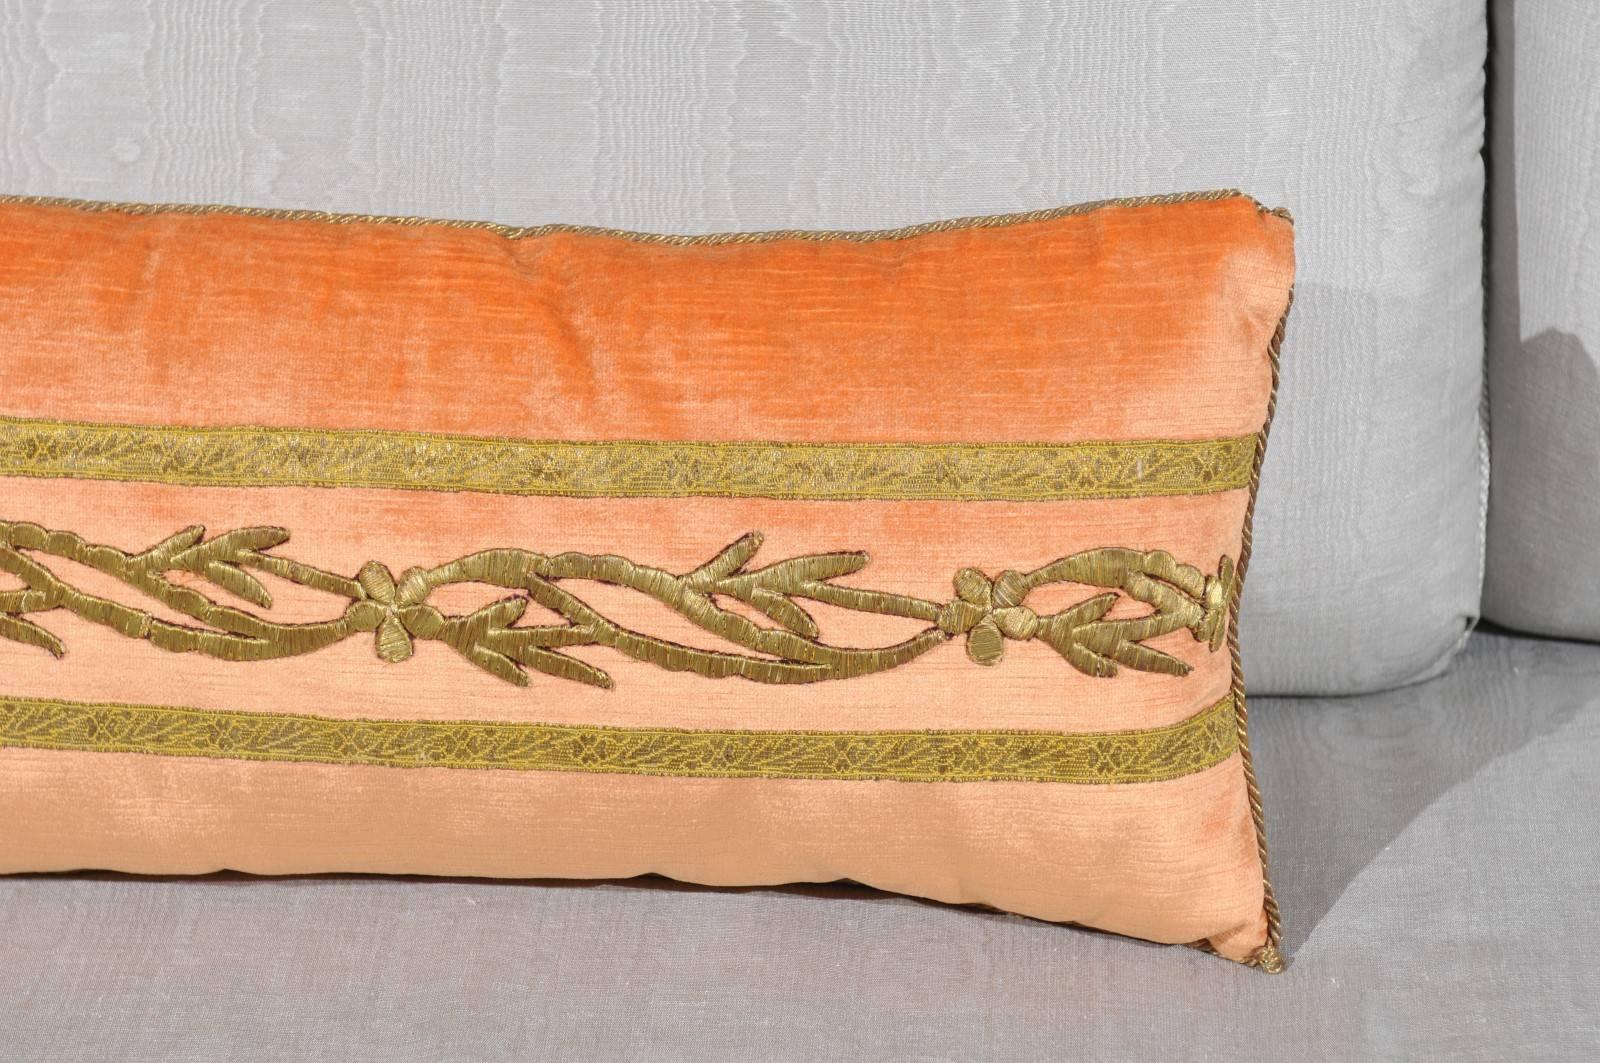 American Antique Ottoman Empire Raised Gold Metallic Embroidery on Melon Velvet Pillow